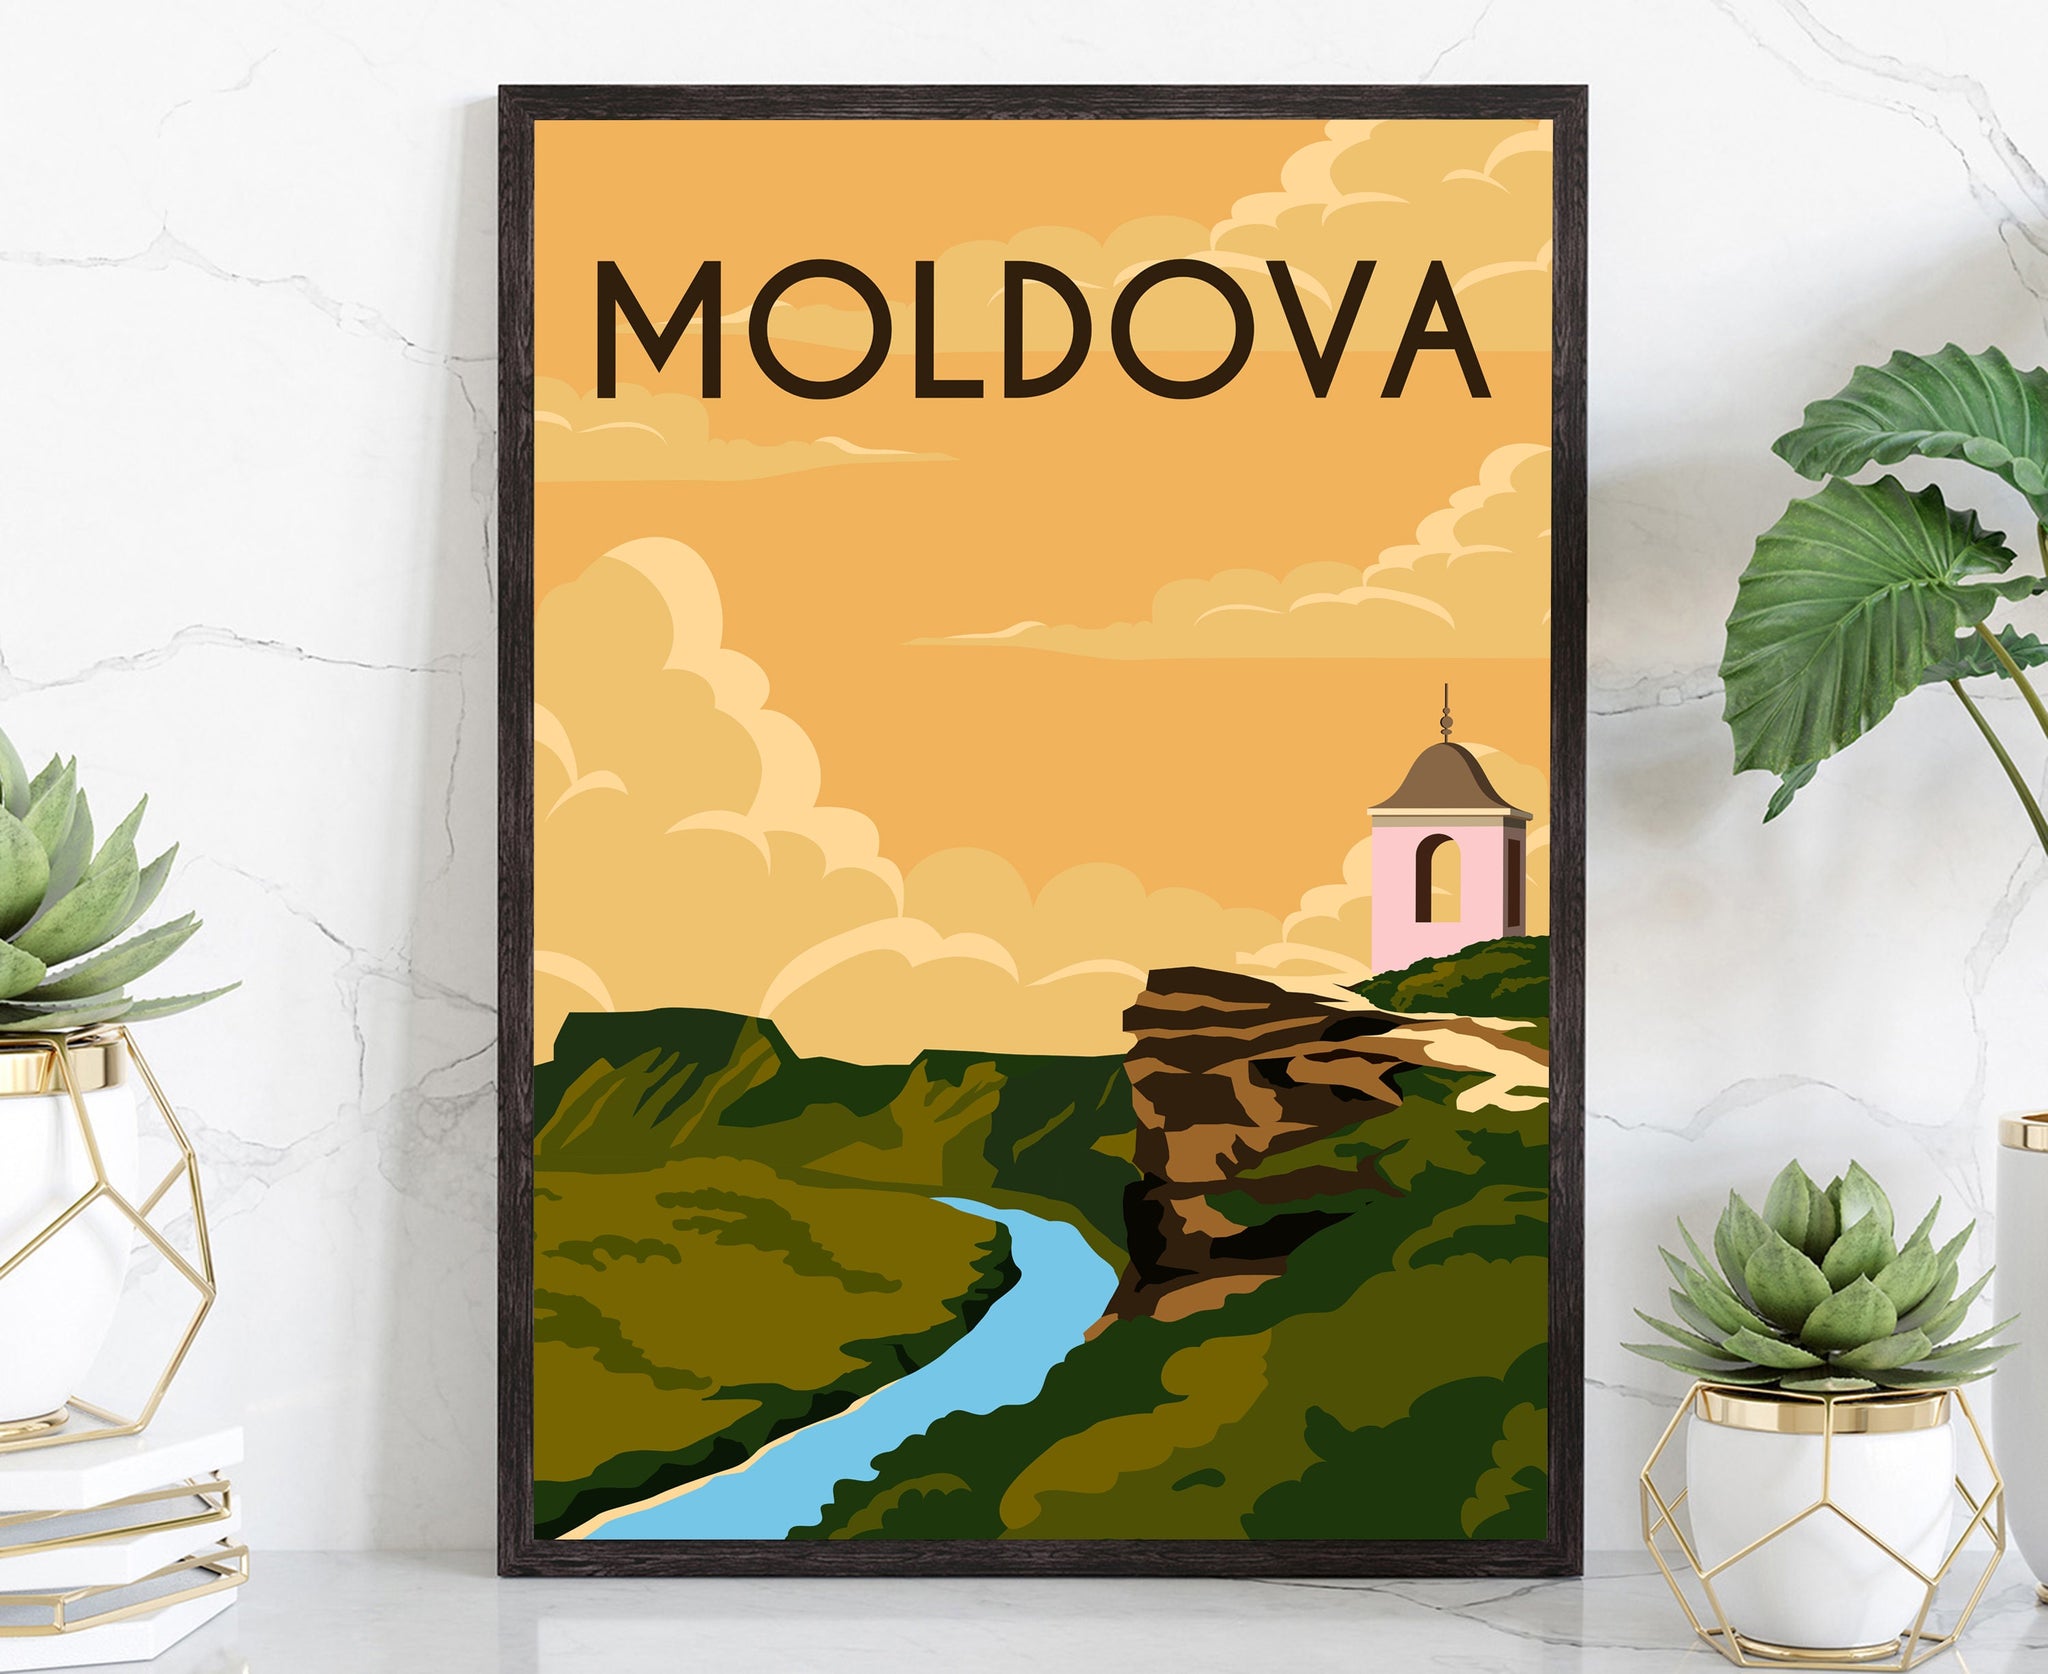 MOLDOVA travel poster, Moldova cityscape and landmark poster wall art, Housewarming gift, Office wall decoration, Moldova retro poster print